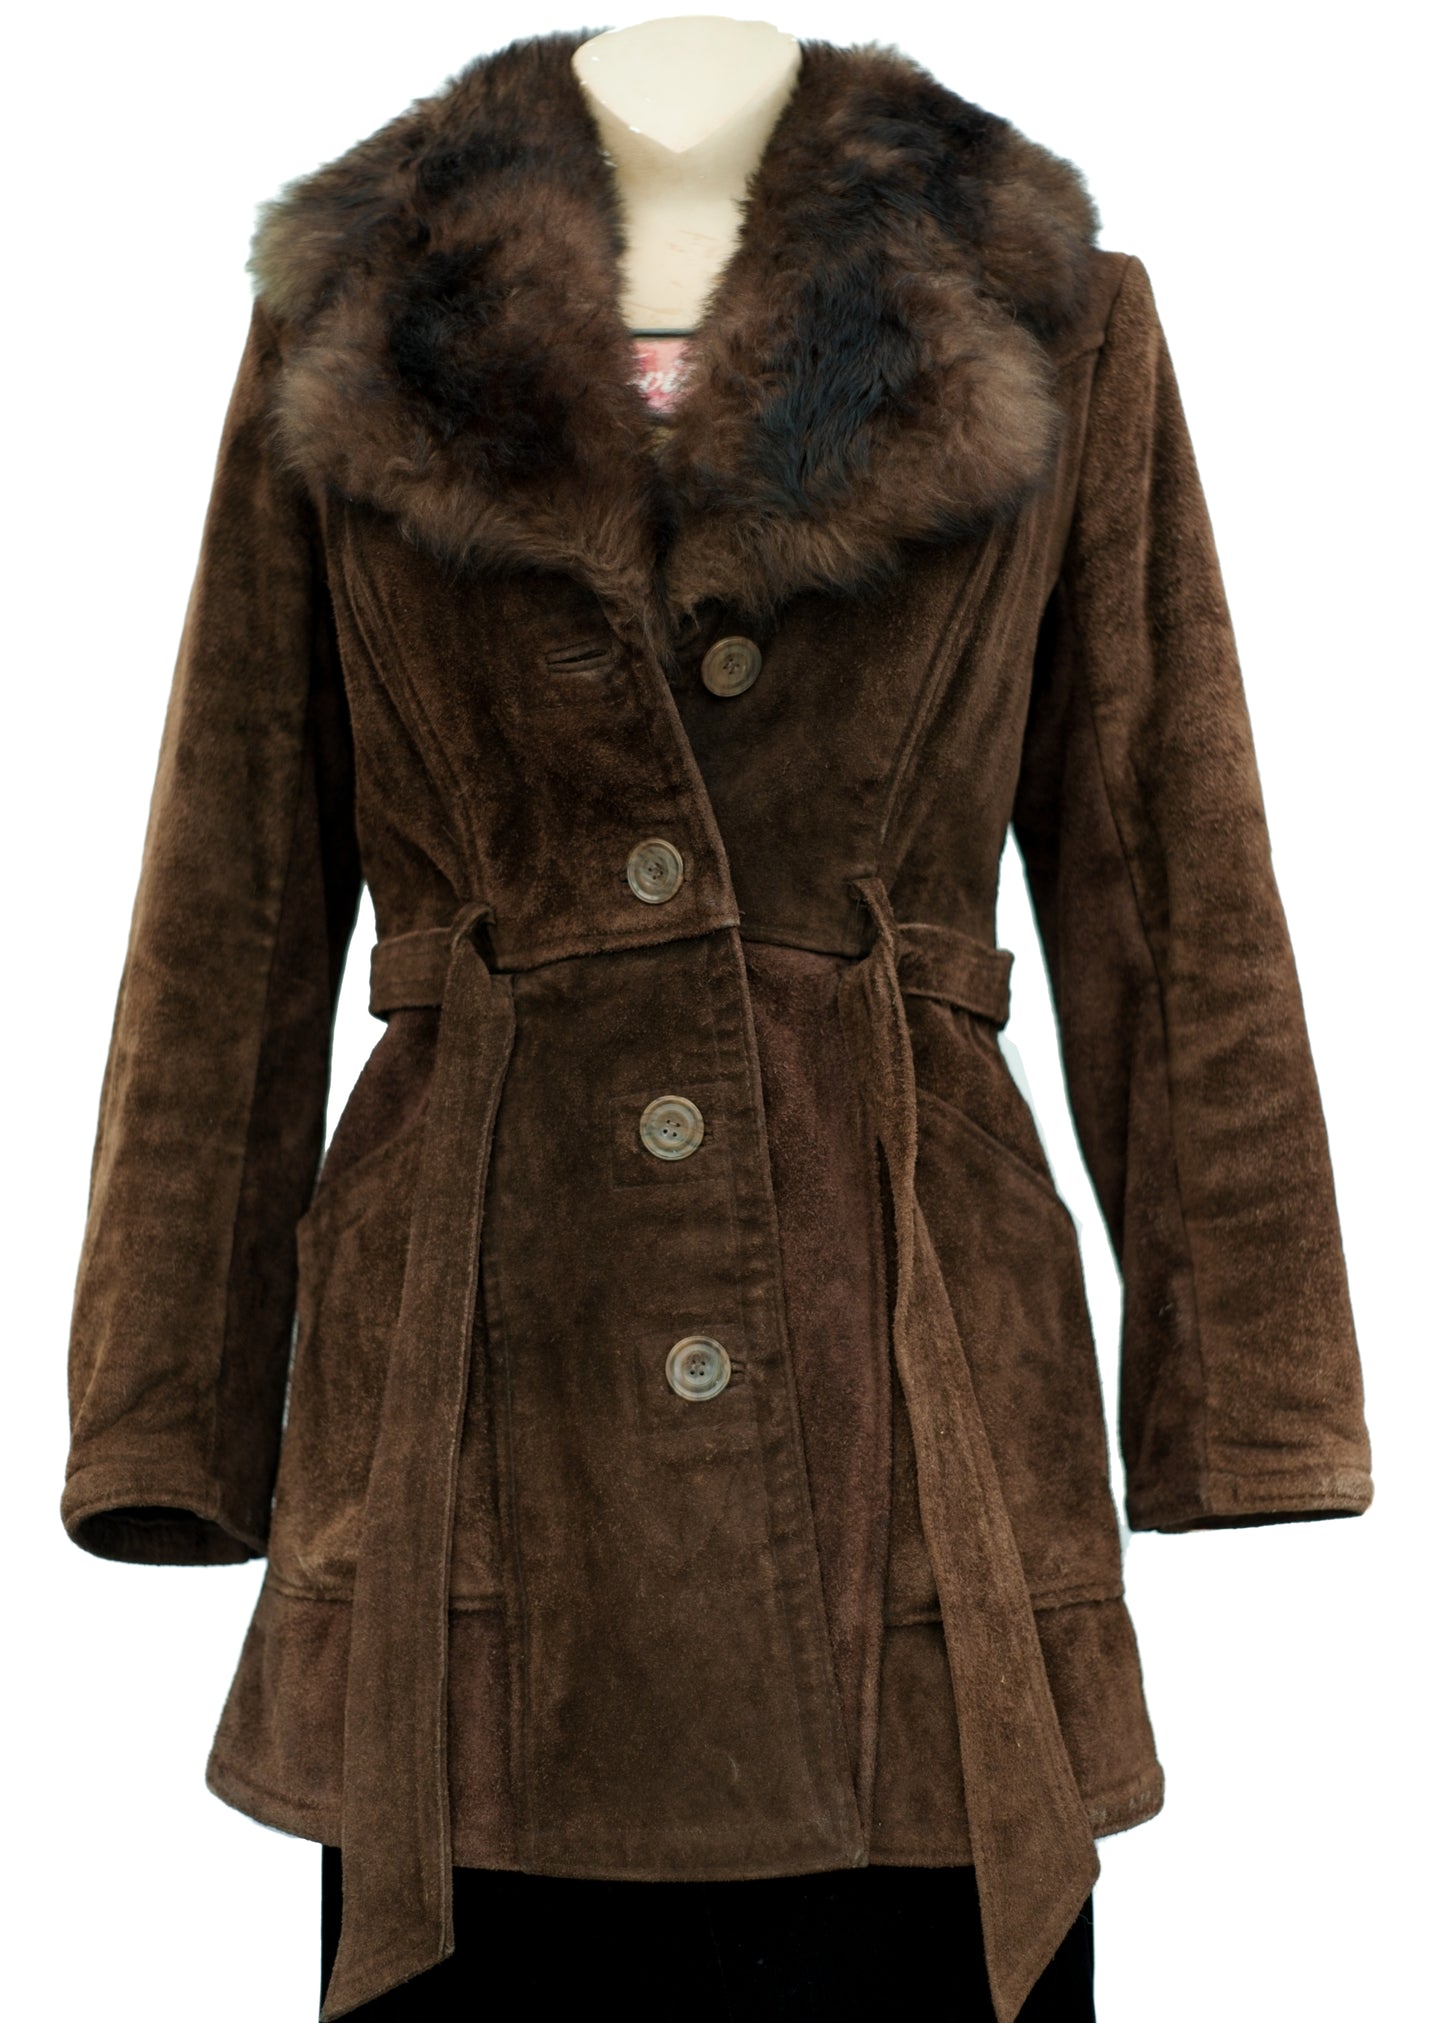 Vintage 70s Brown Suede Penny Lane Coat • Faux Fur Collar